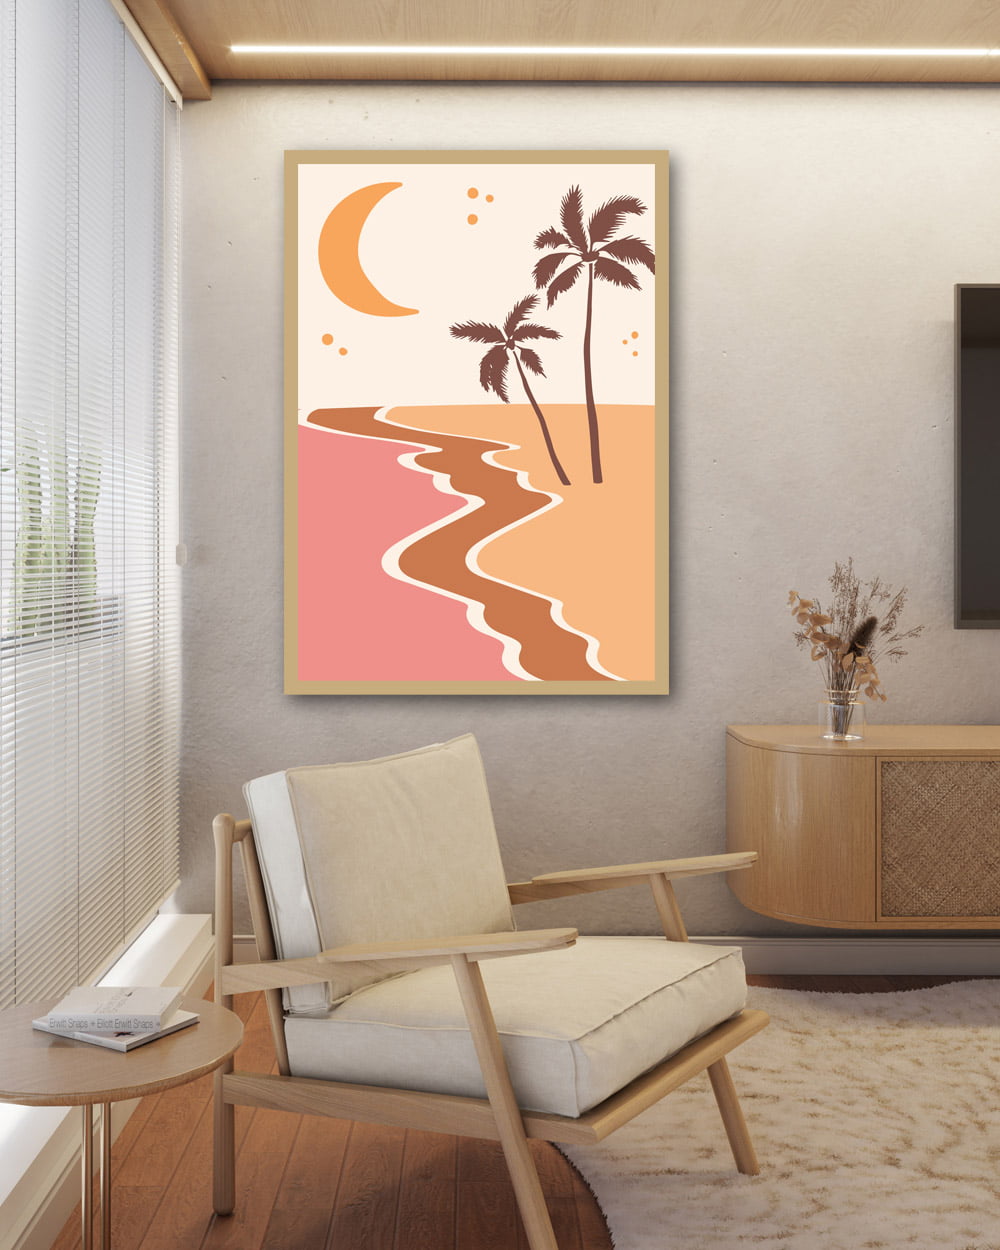 Quadro Decorativo Abstrato Praia Rosa Coqueiro  